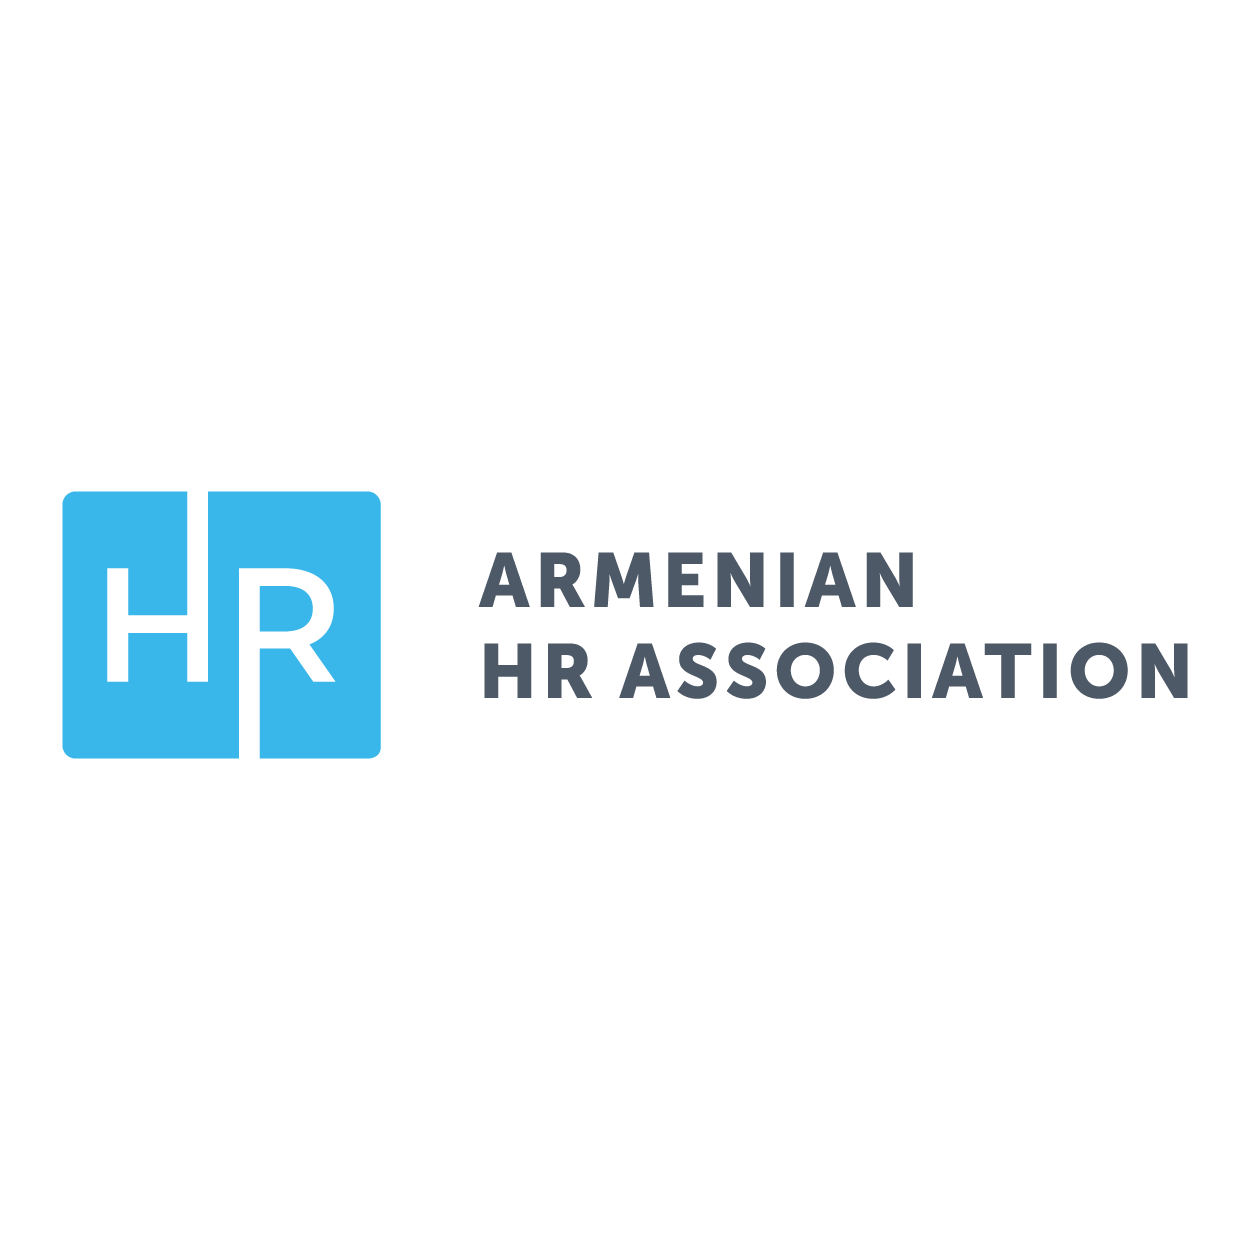 Armenian HR Association logo